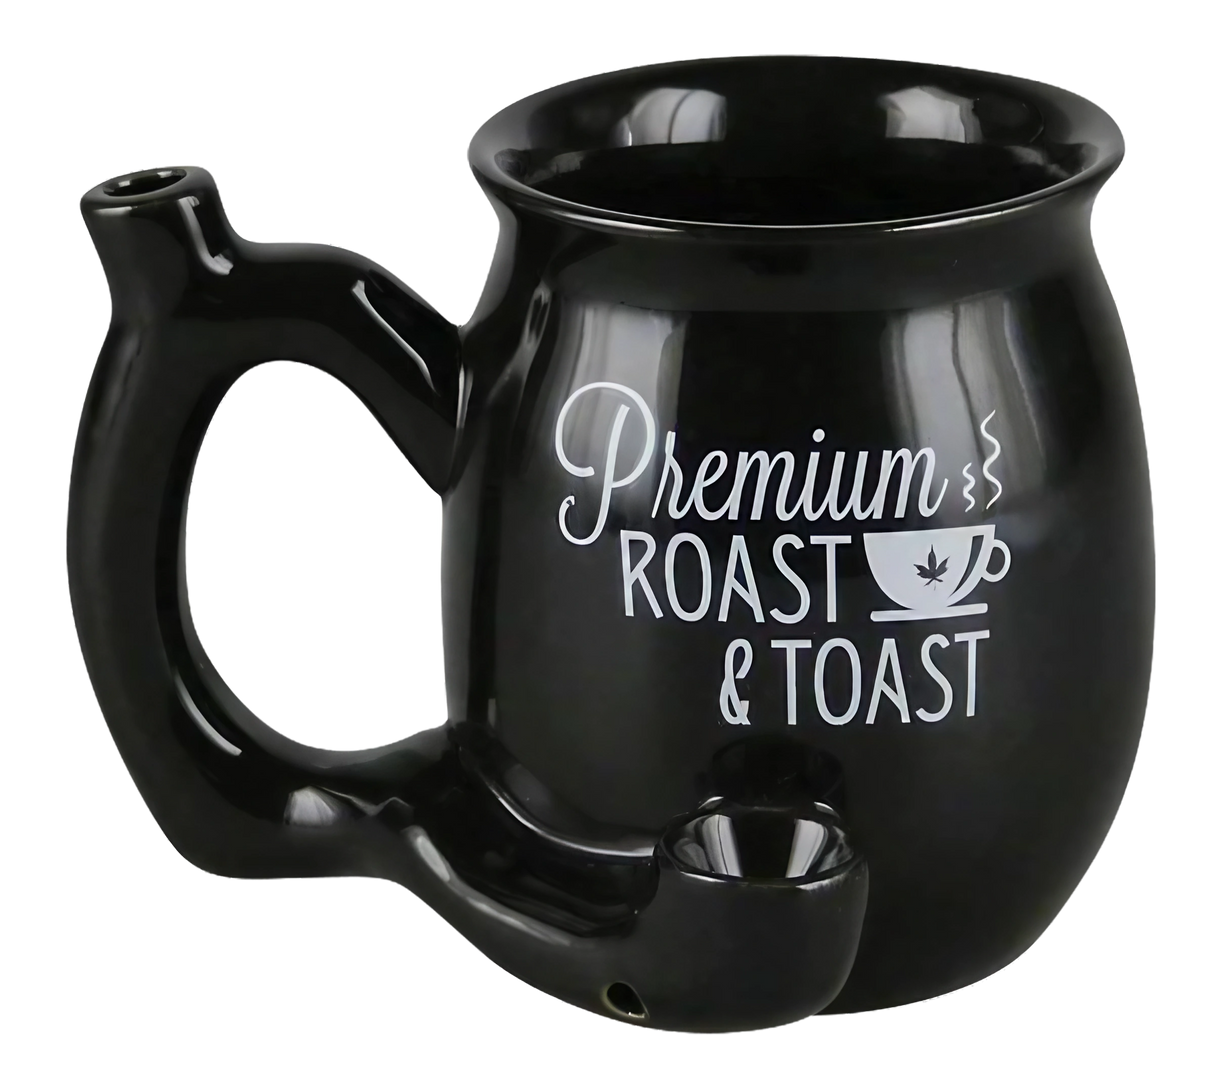 Roast & Toast Ceramic Mug Pipe in Black for Dry Herbs, Novelty 4" Home Decor